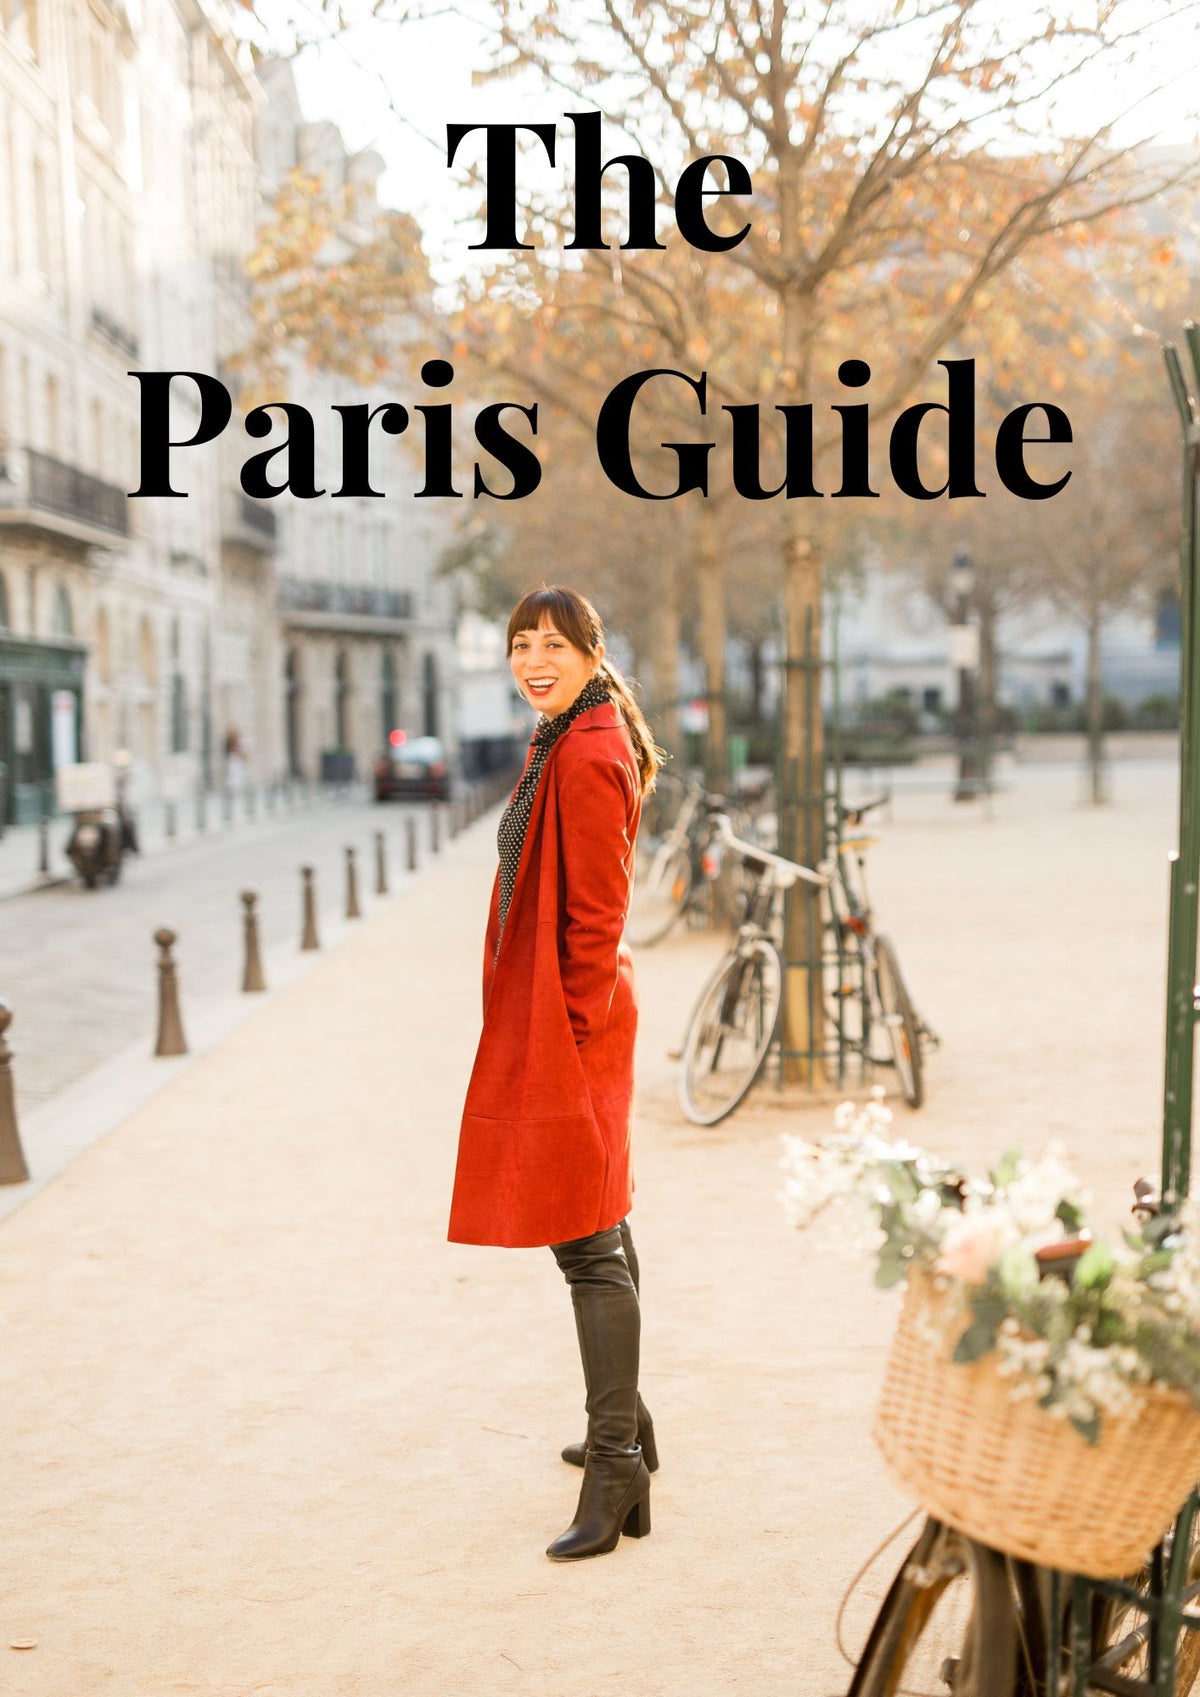 A Year In Paris 2024 Calendar and The Paris Guide